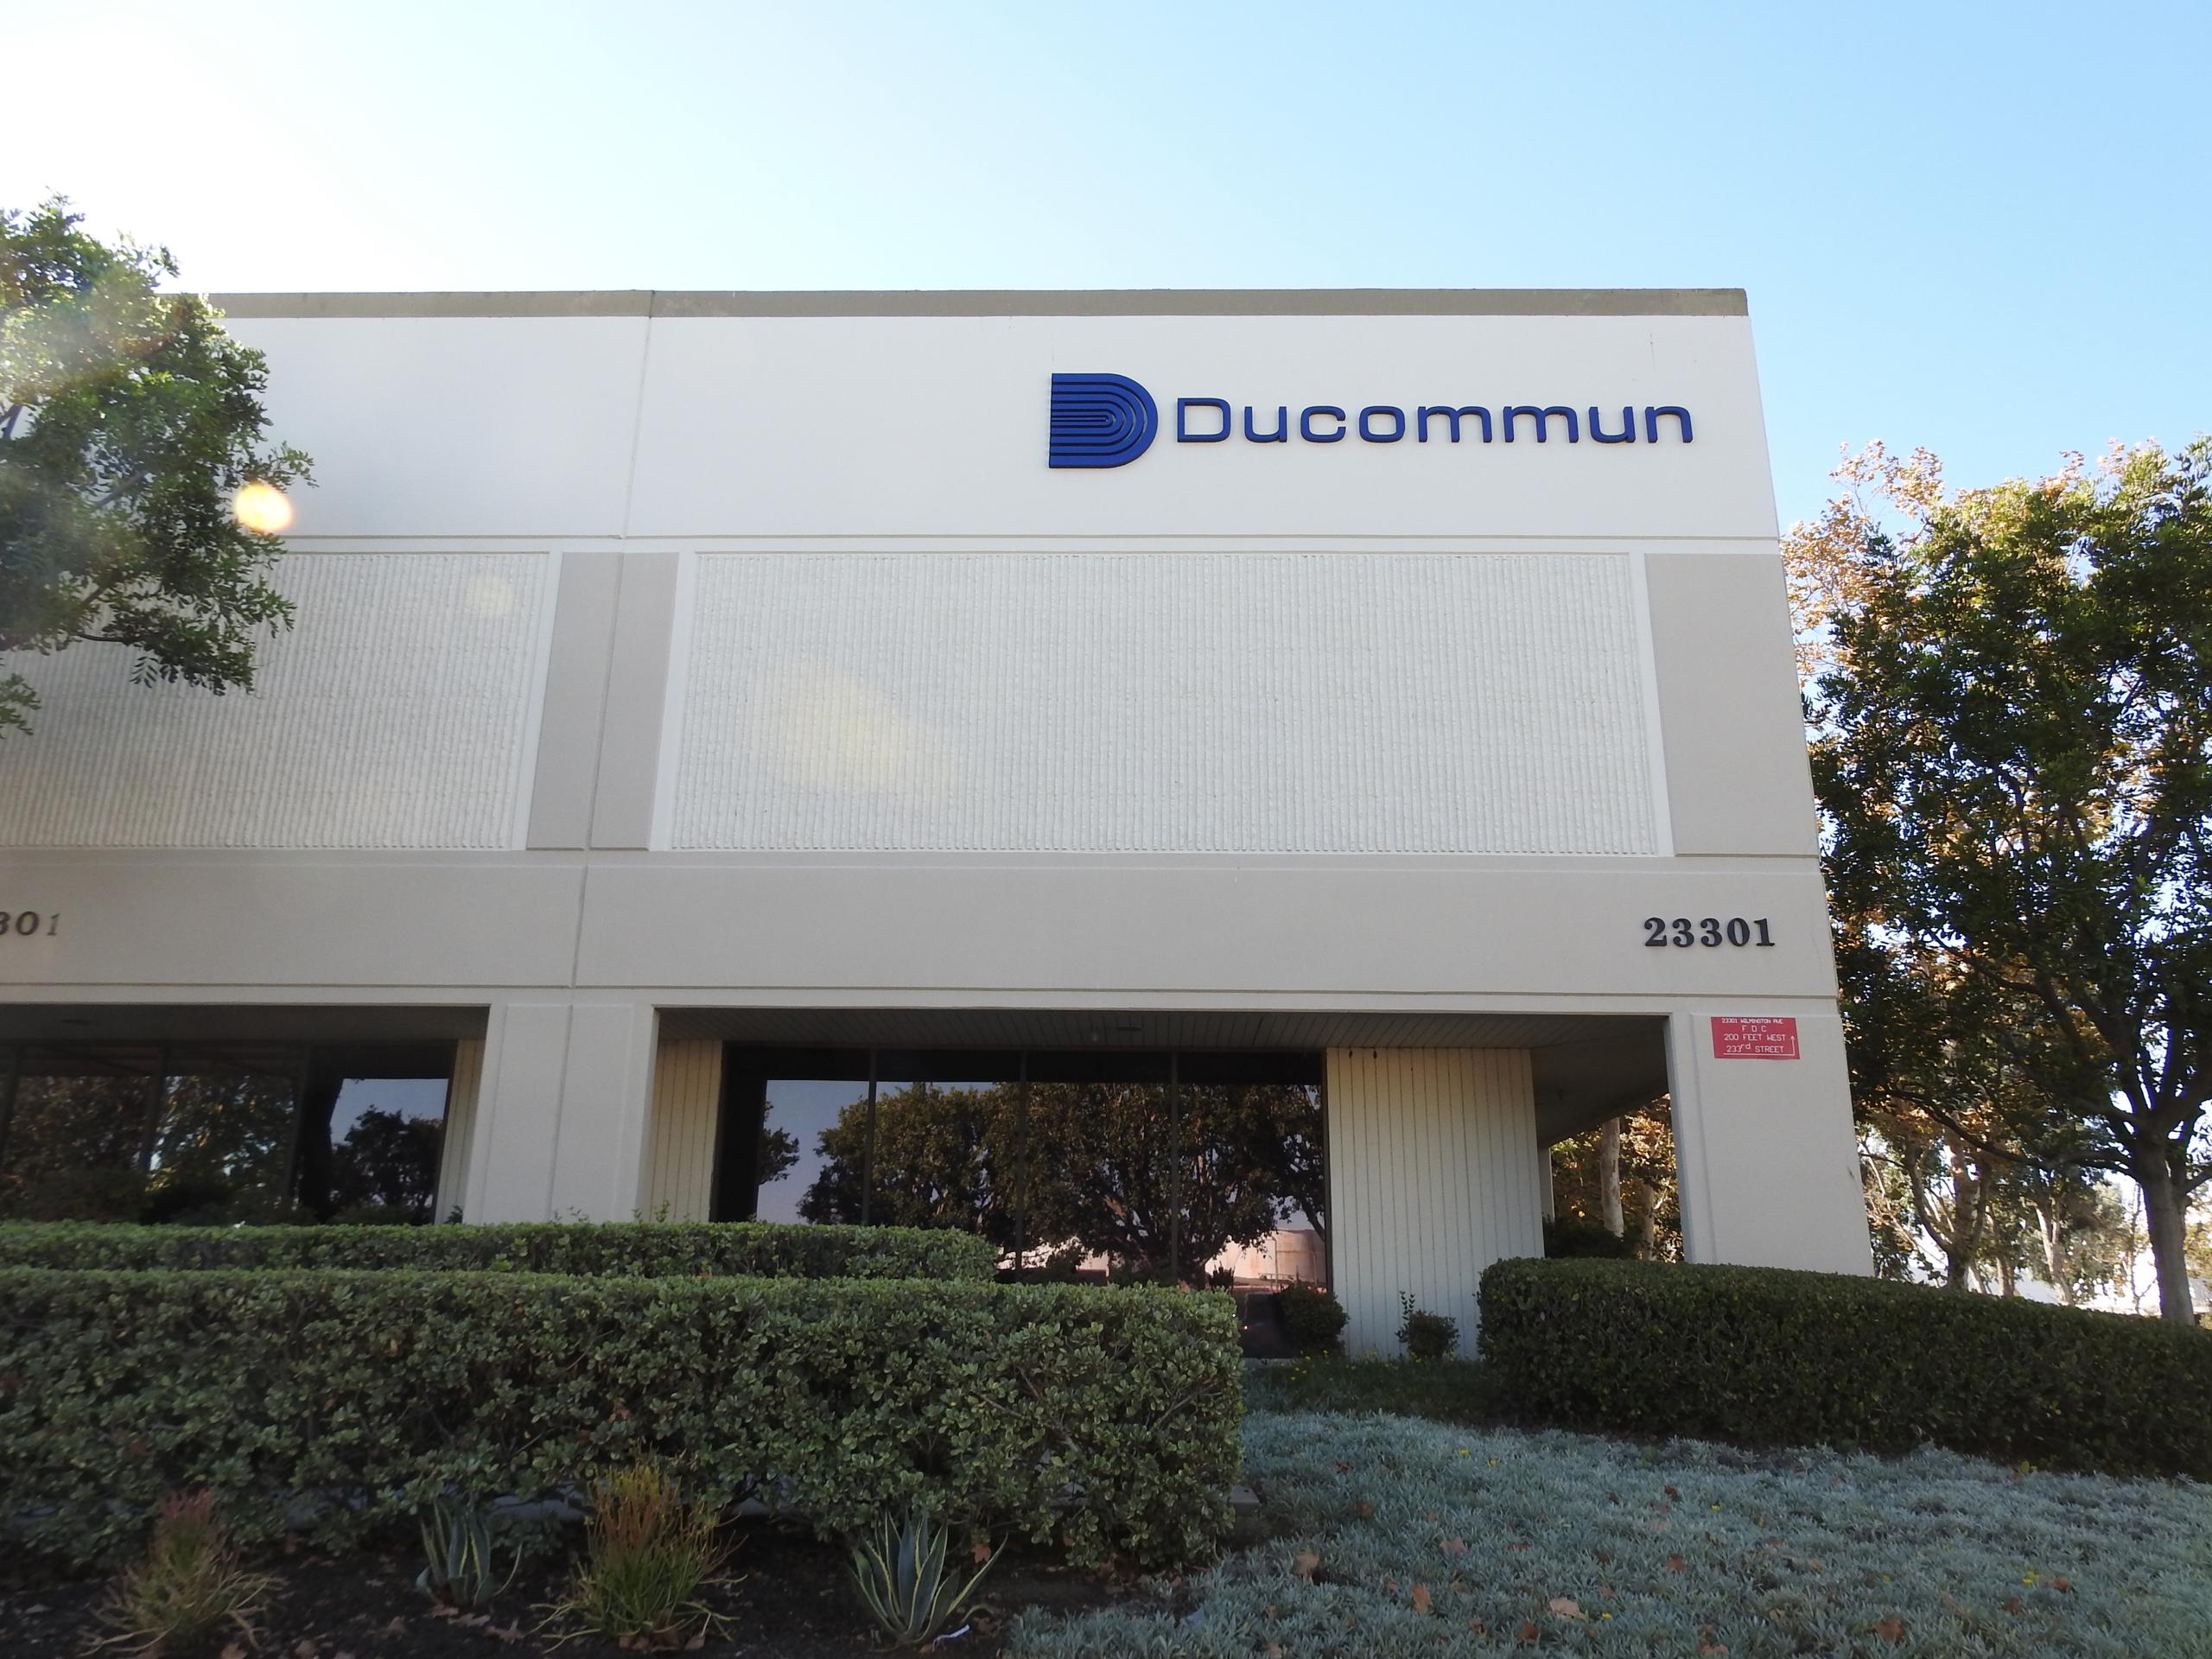 Ducommun incorporated announces award of major defense orders for Raytheon radar systems